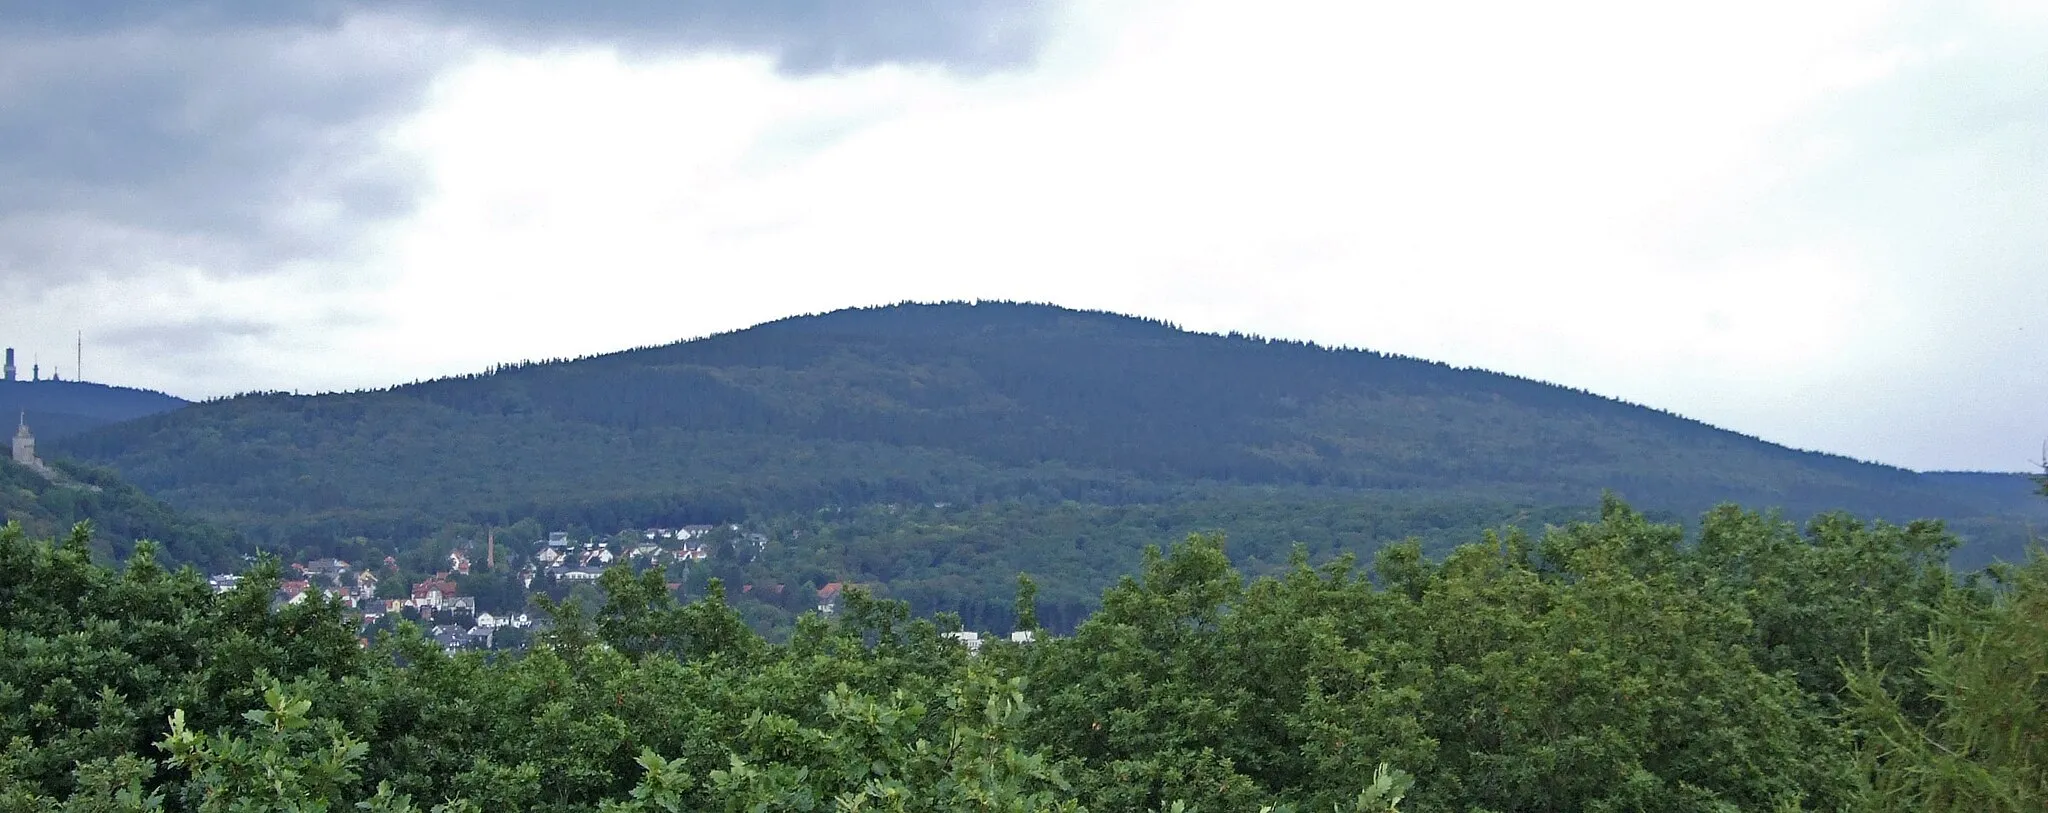 Photo showing: "Altkoenig" (3rd highest mountain in "Taunus"), seen from "Koenigstein" in Hesse, Germany